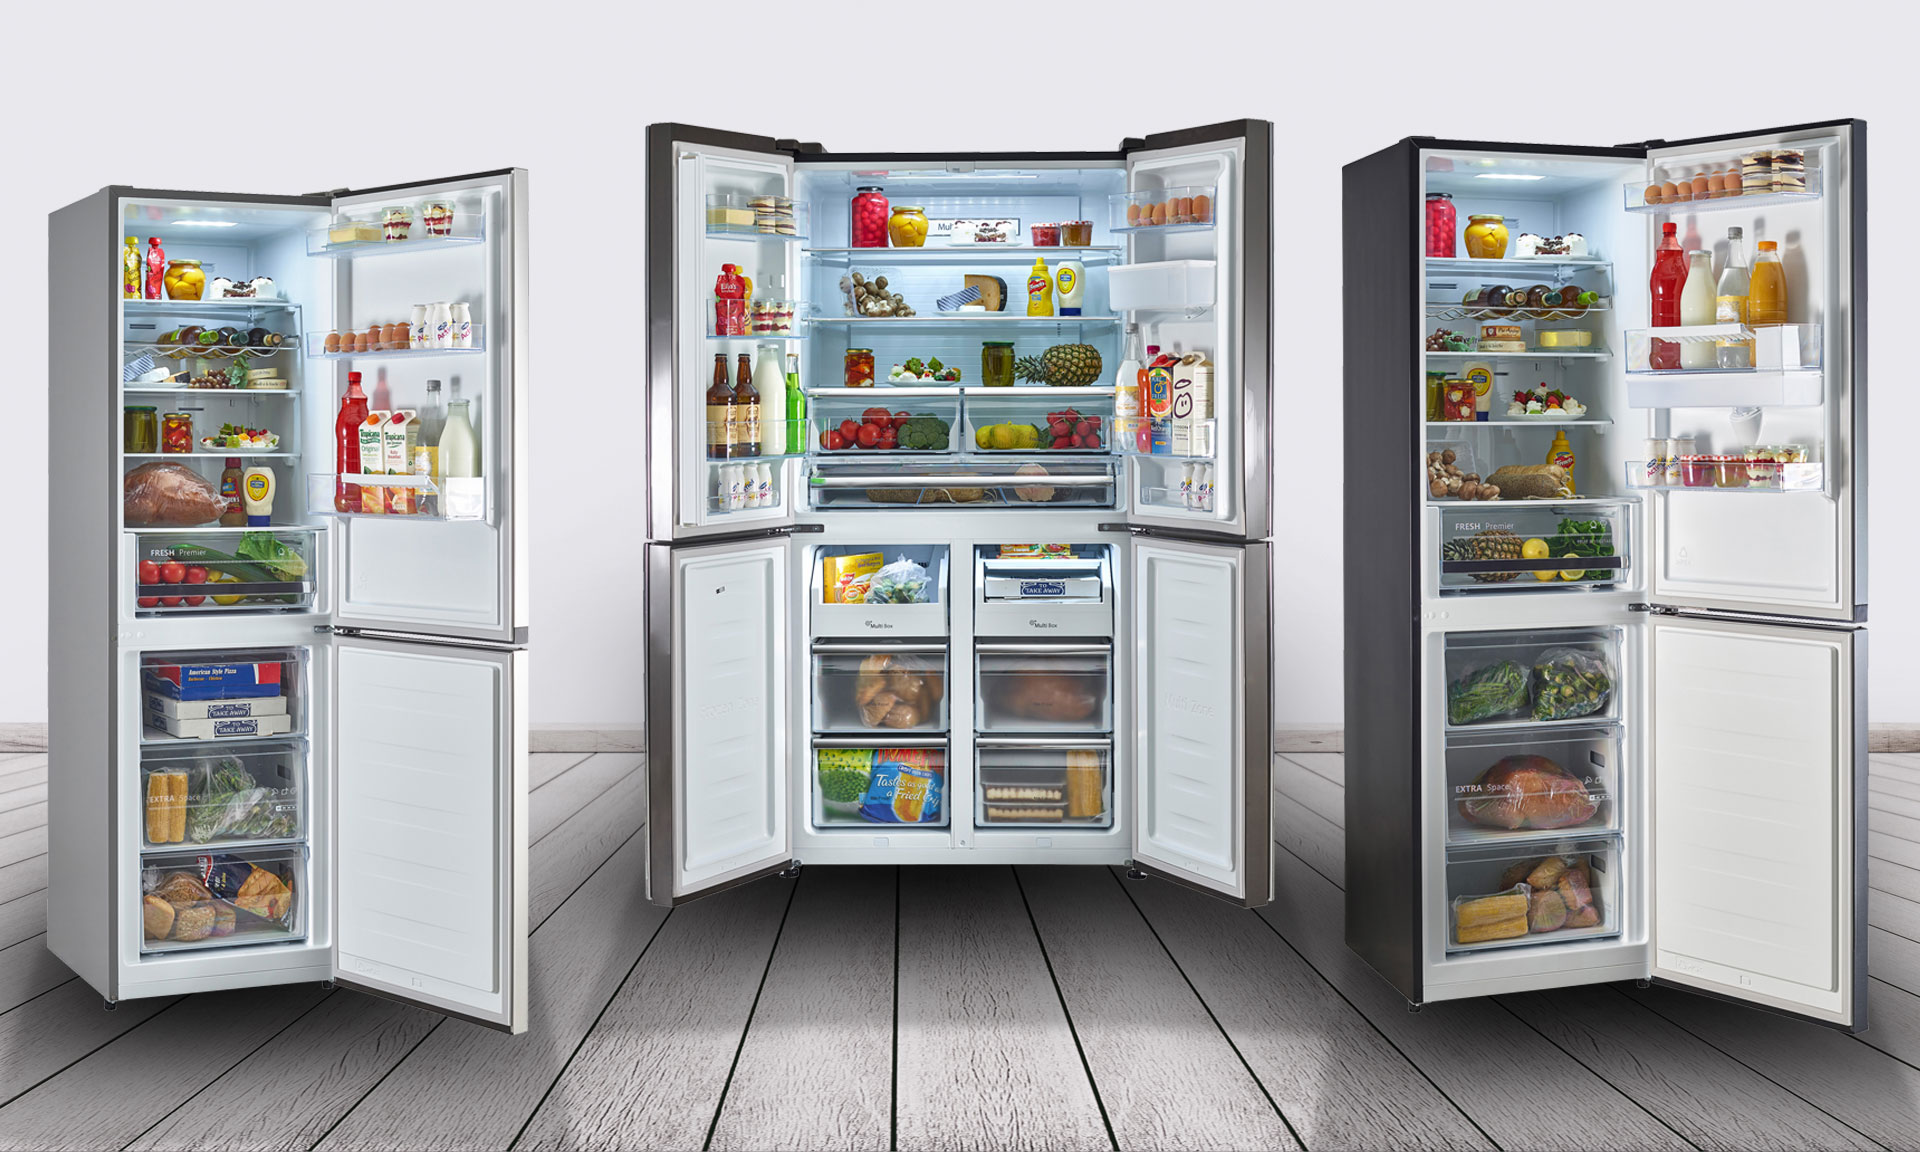 Hisense fridge